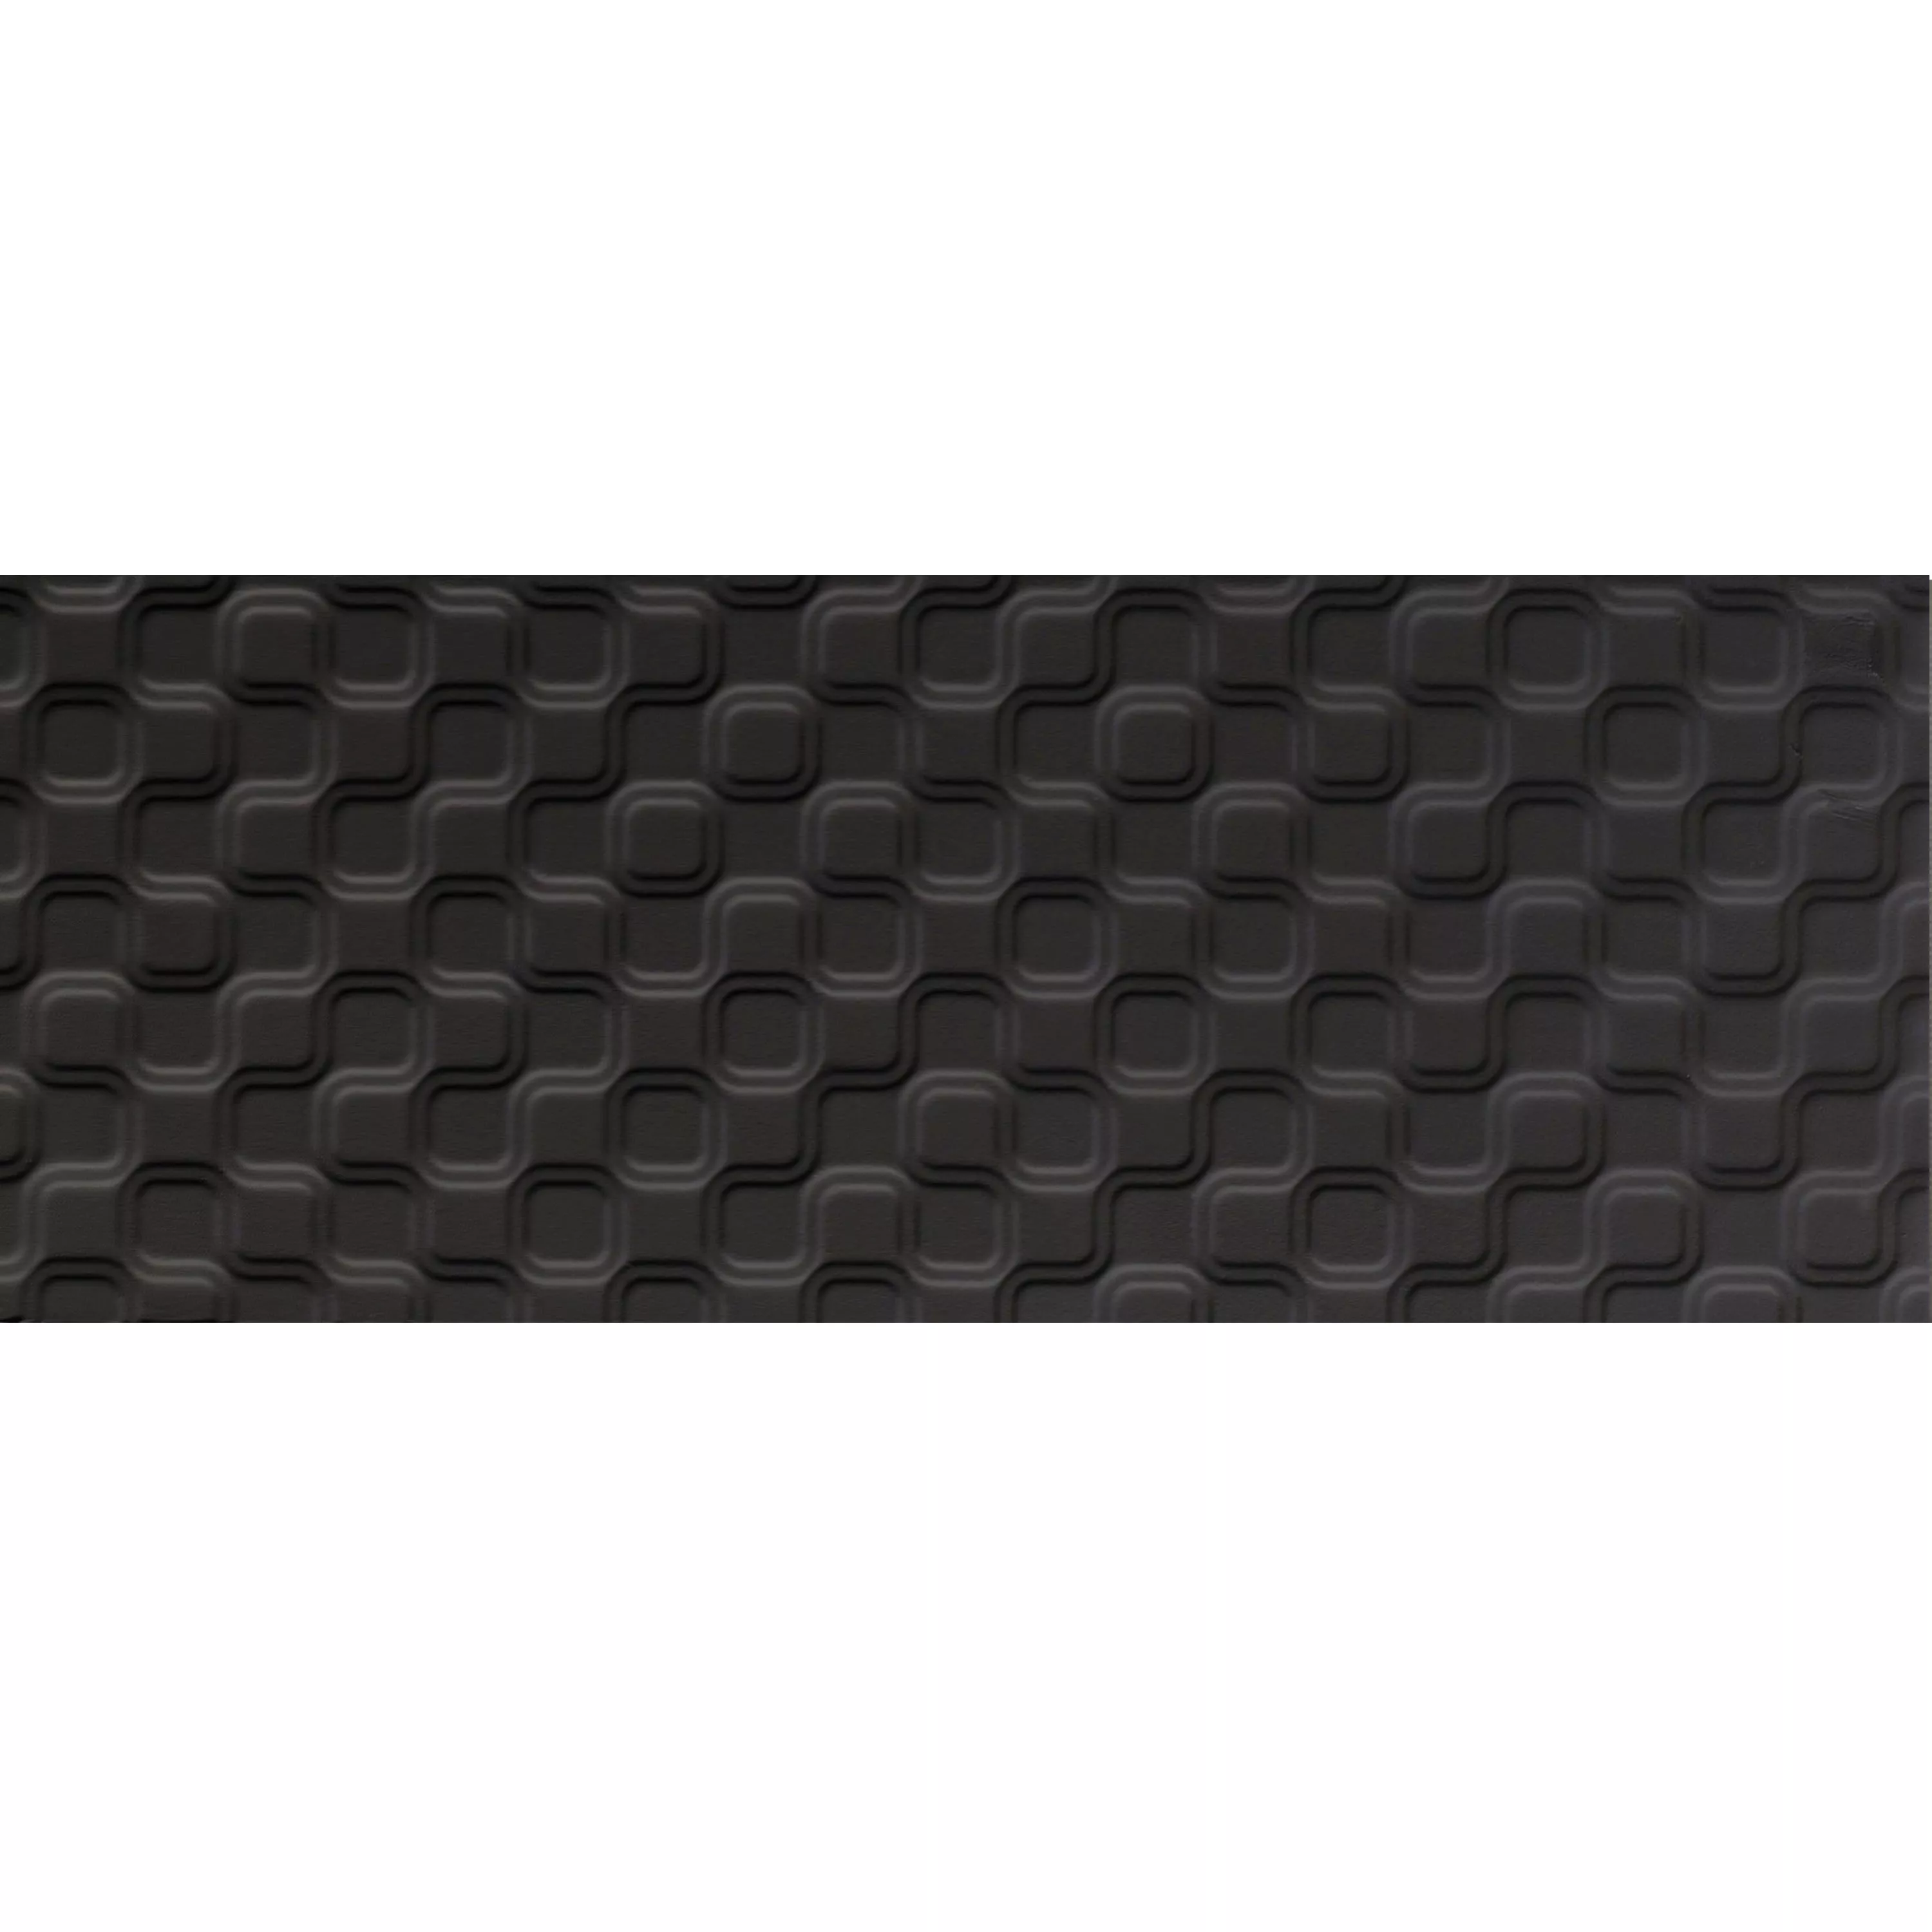 Sample Wall Tiles Swissland Nano Mat 15x40cm Black